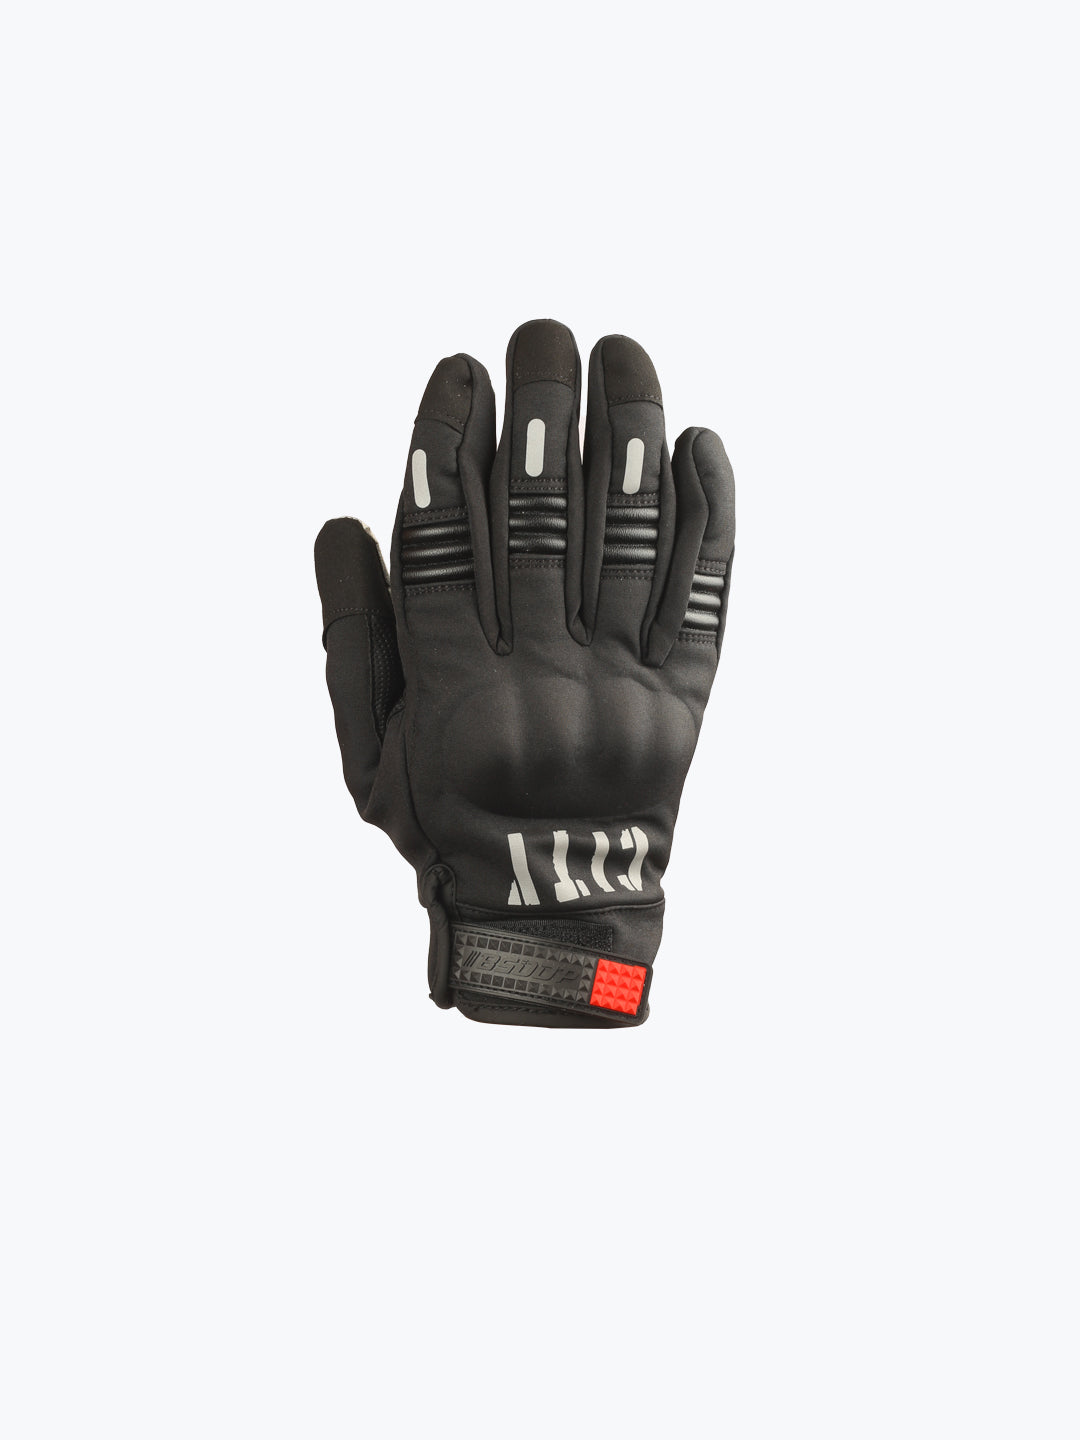 BSDDP City Gloves A0112 Black